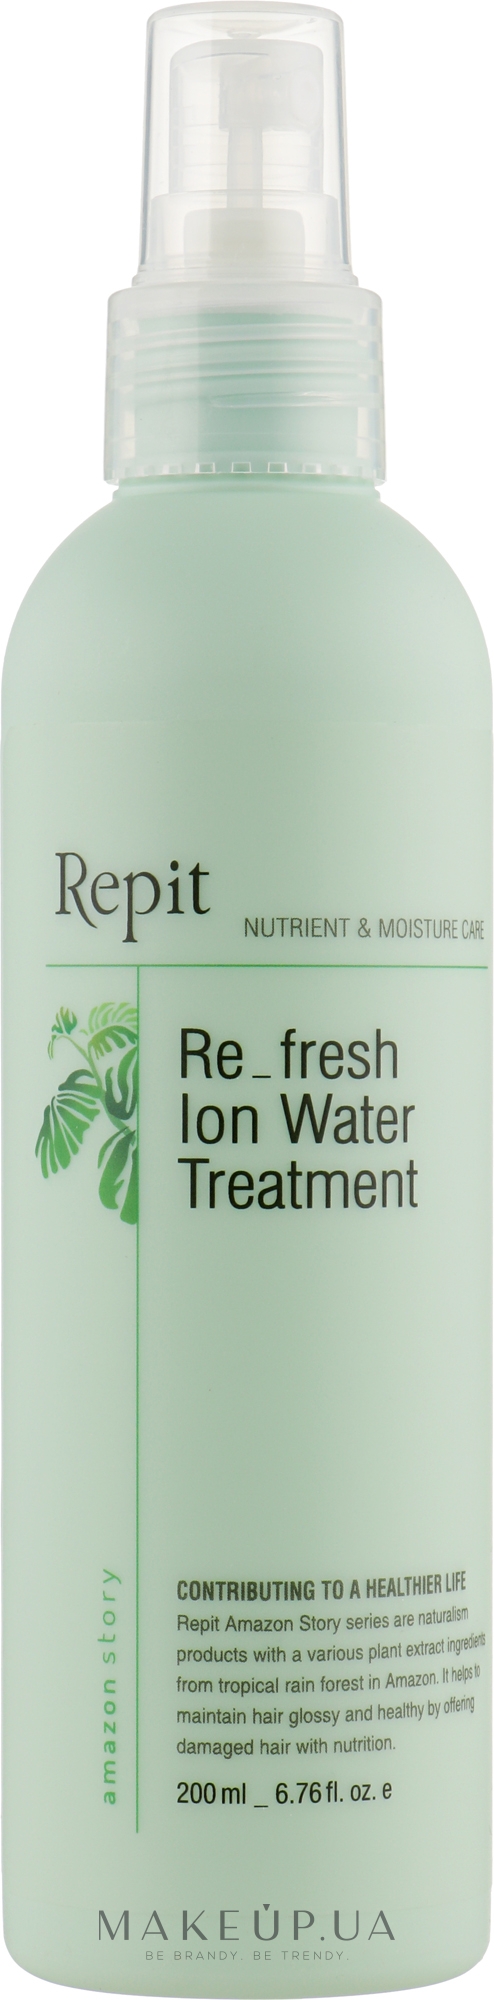 Ионизированная вода - Repit Re Freshing Ion Water Treatment Amazon Story — фото 200ml